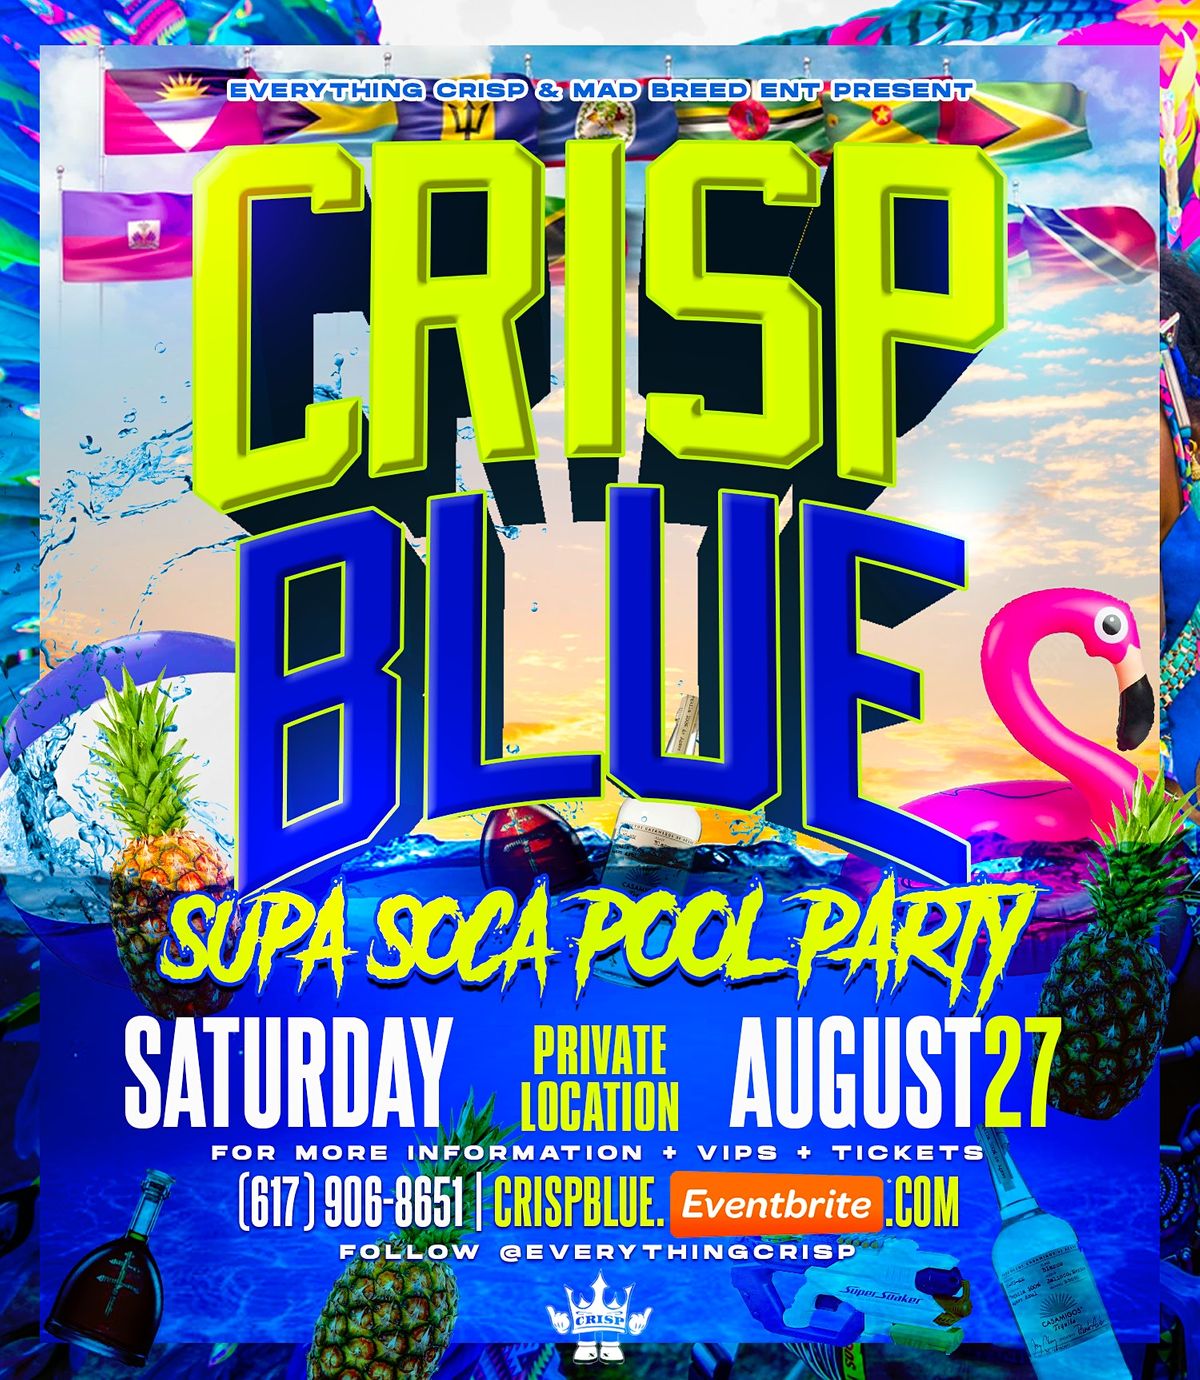 CRISP BLUE SUPA SOCA POOL PARTY CRISP BLUE SHUTTLE PARKING, Brockton